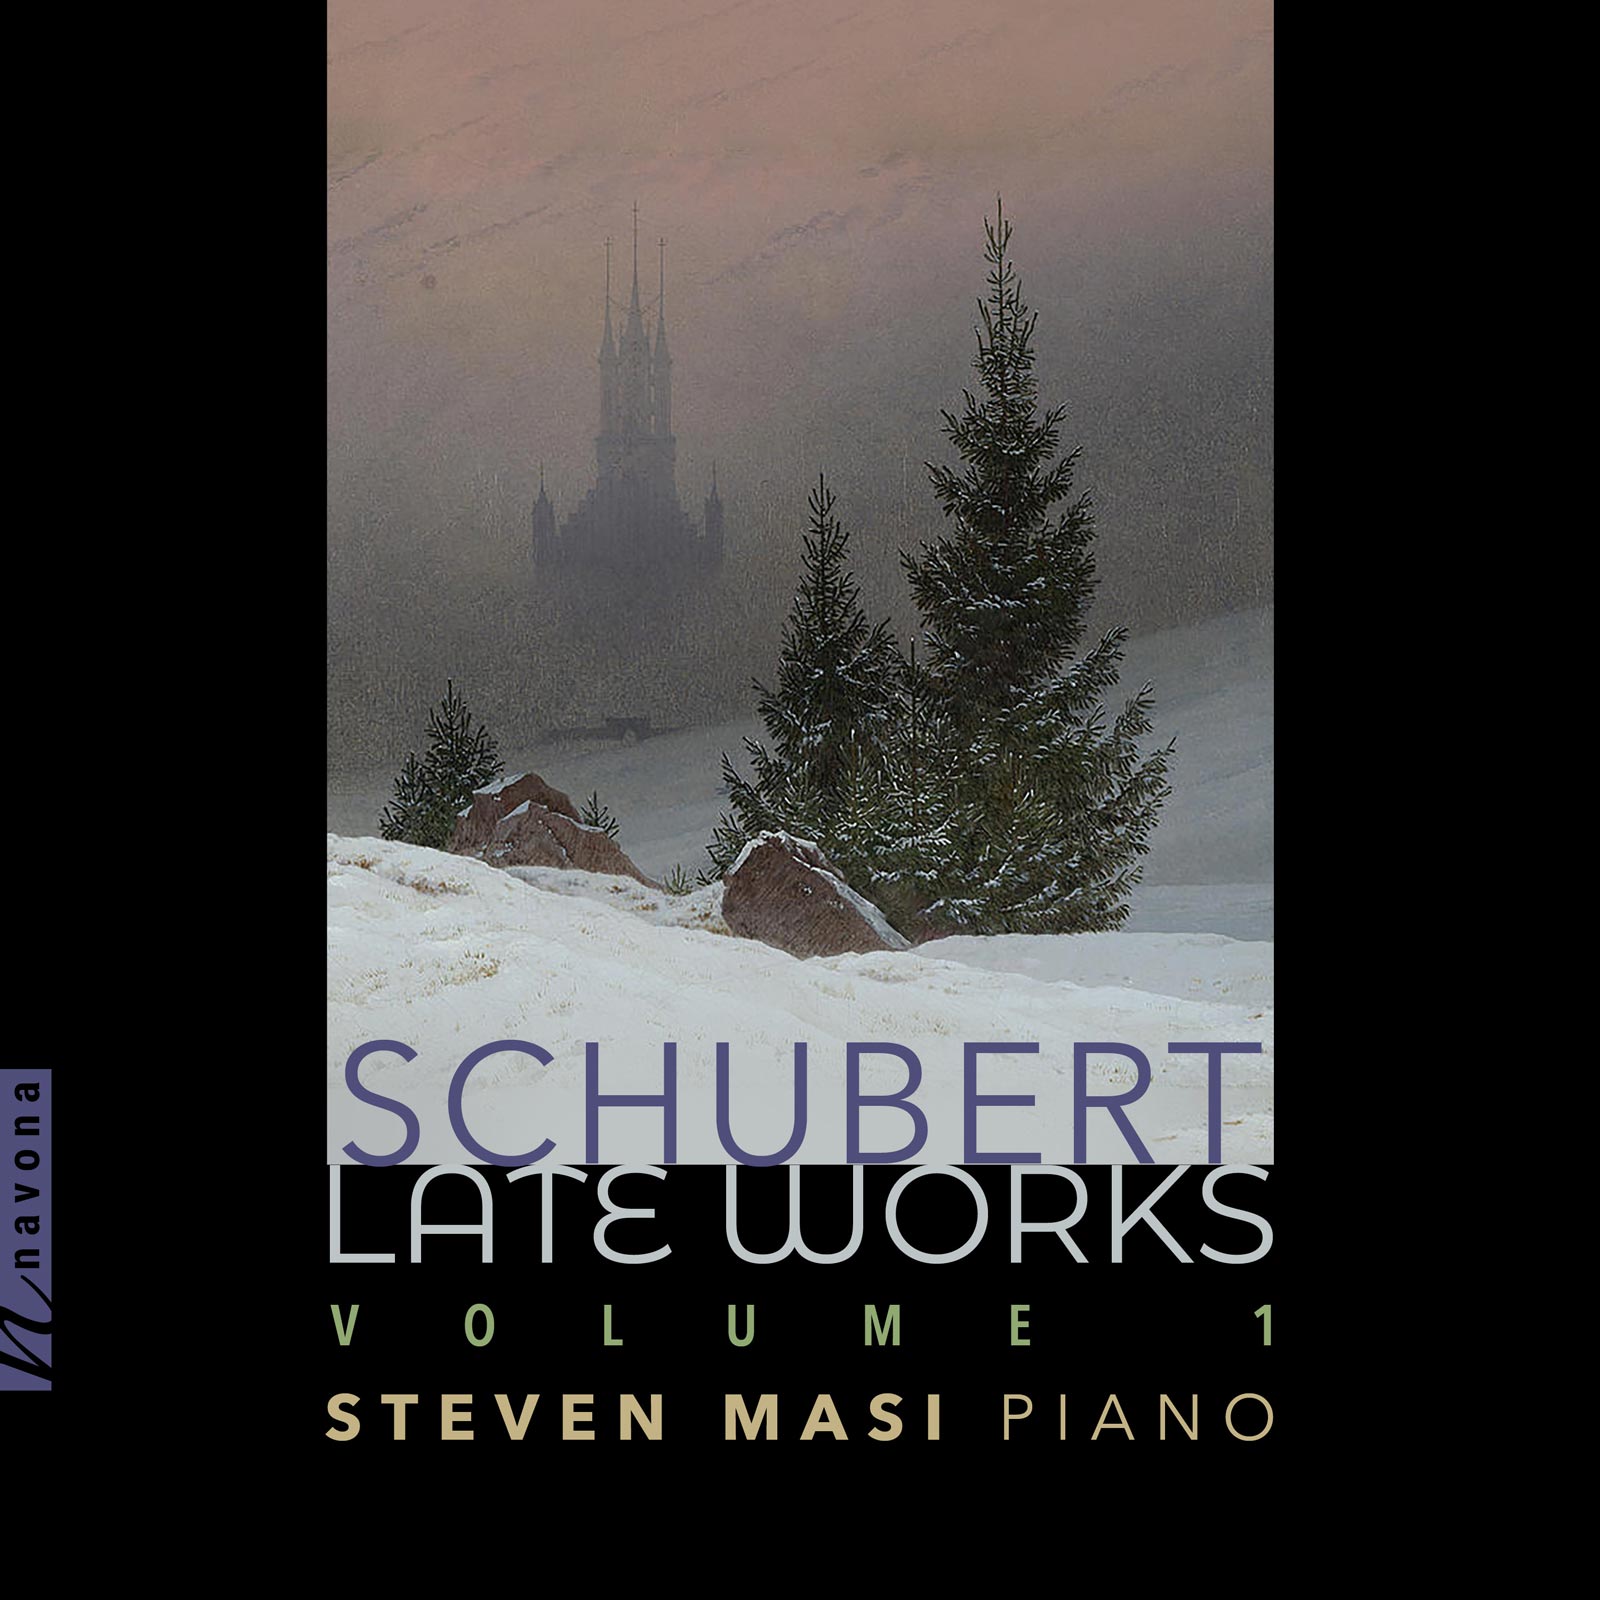 Schubert Late Works Volume 1 - album cover